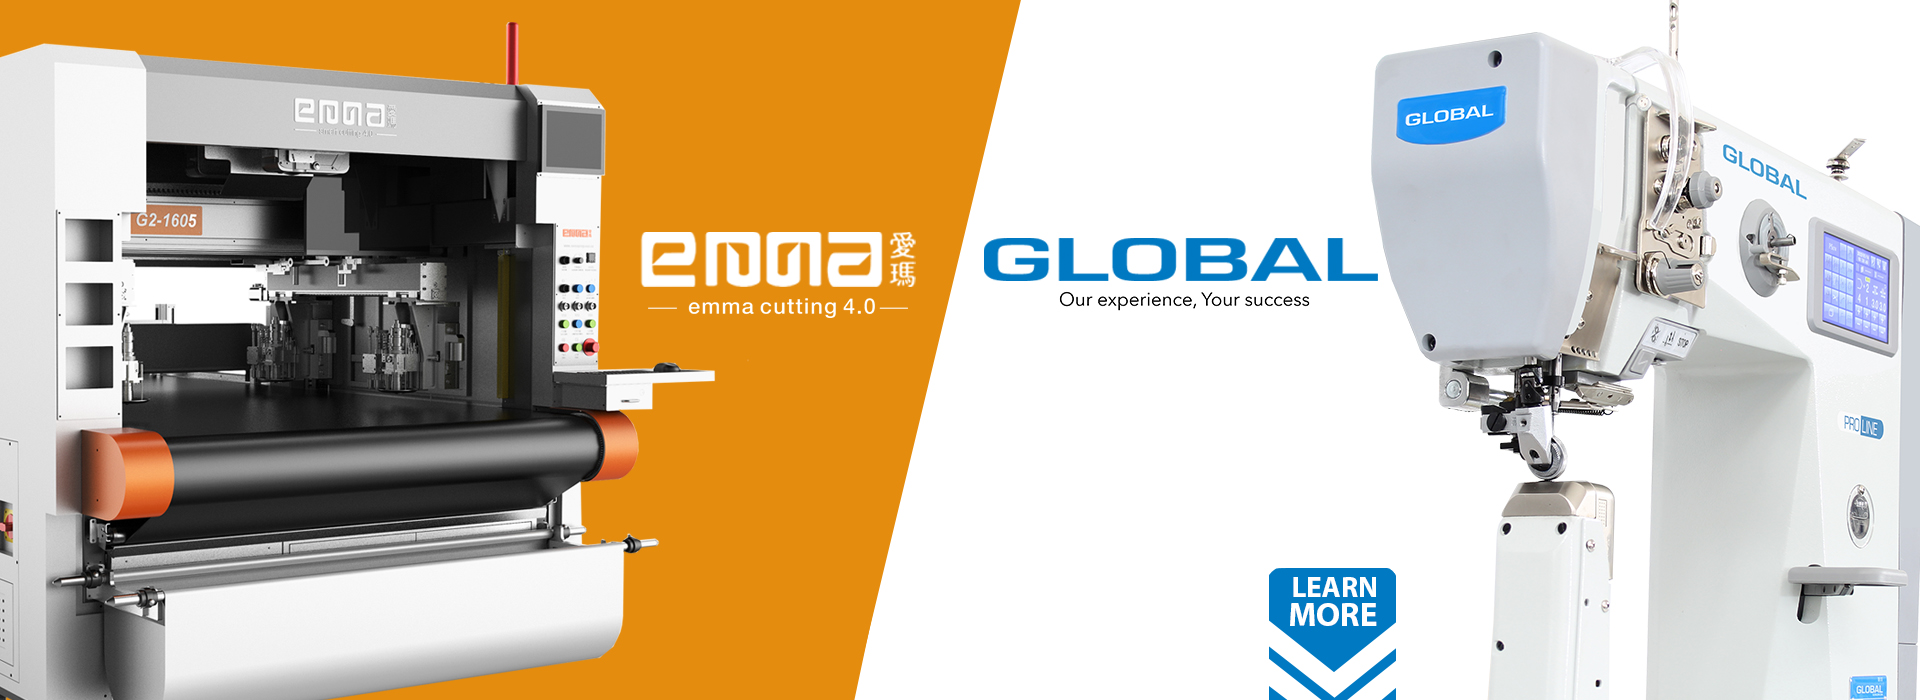 EMMA-GLOBAL-Schieberegler-2024-Globale-Naht-GlobaL